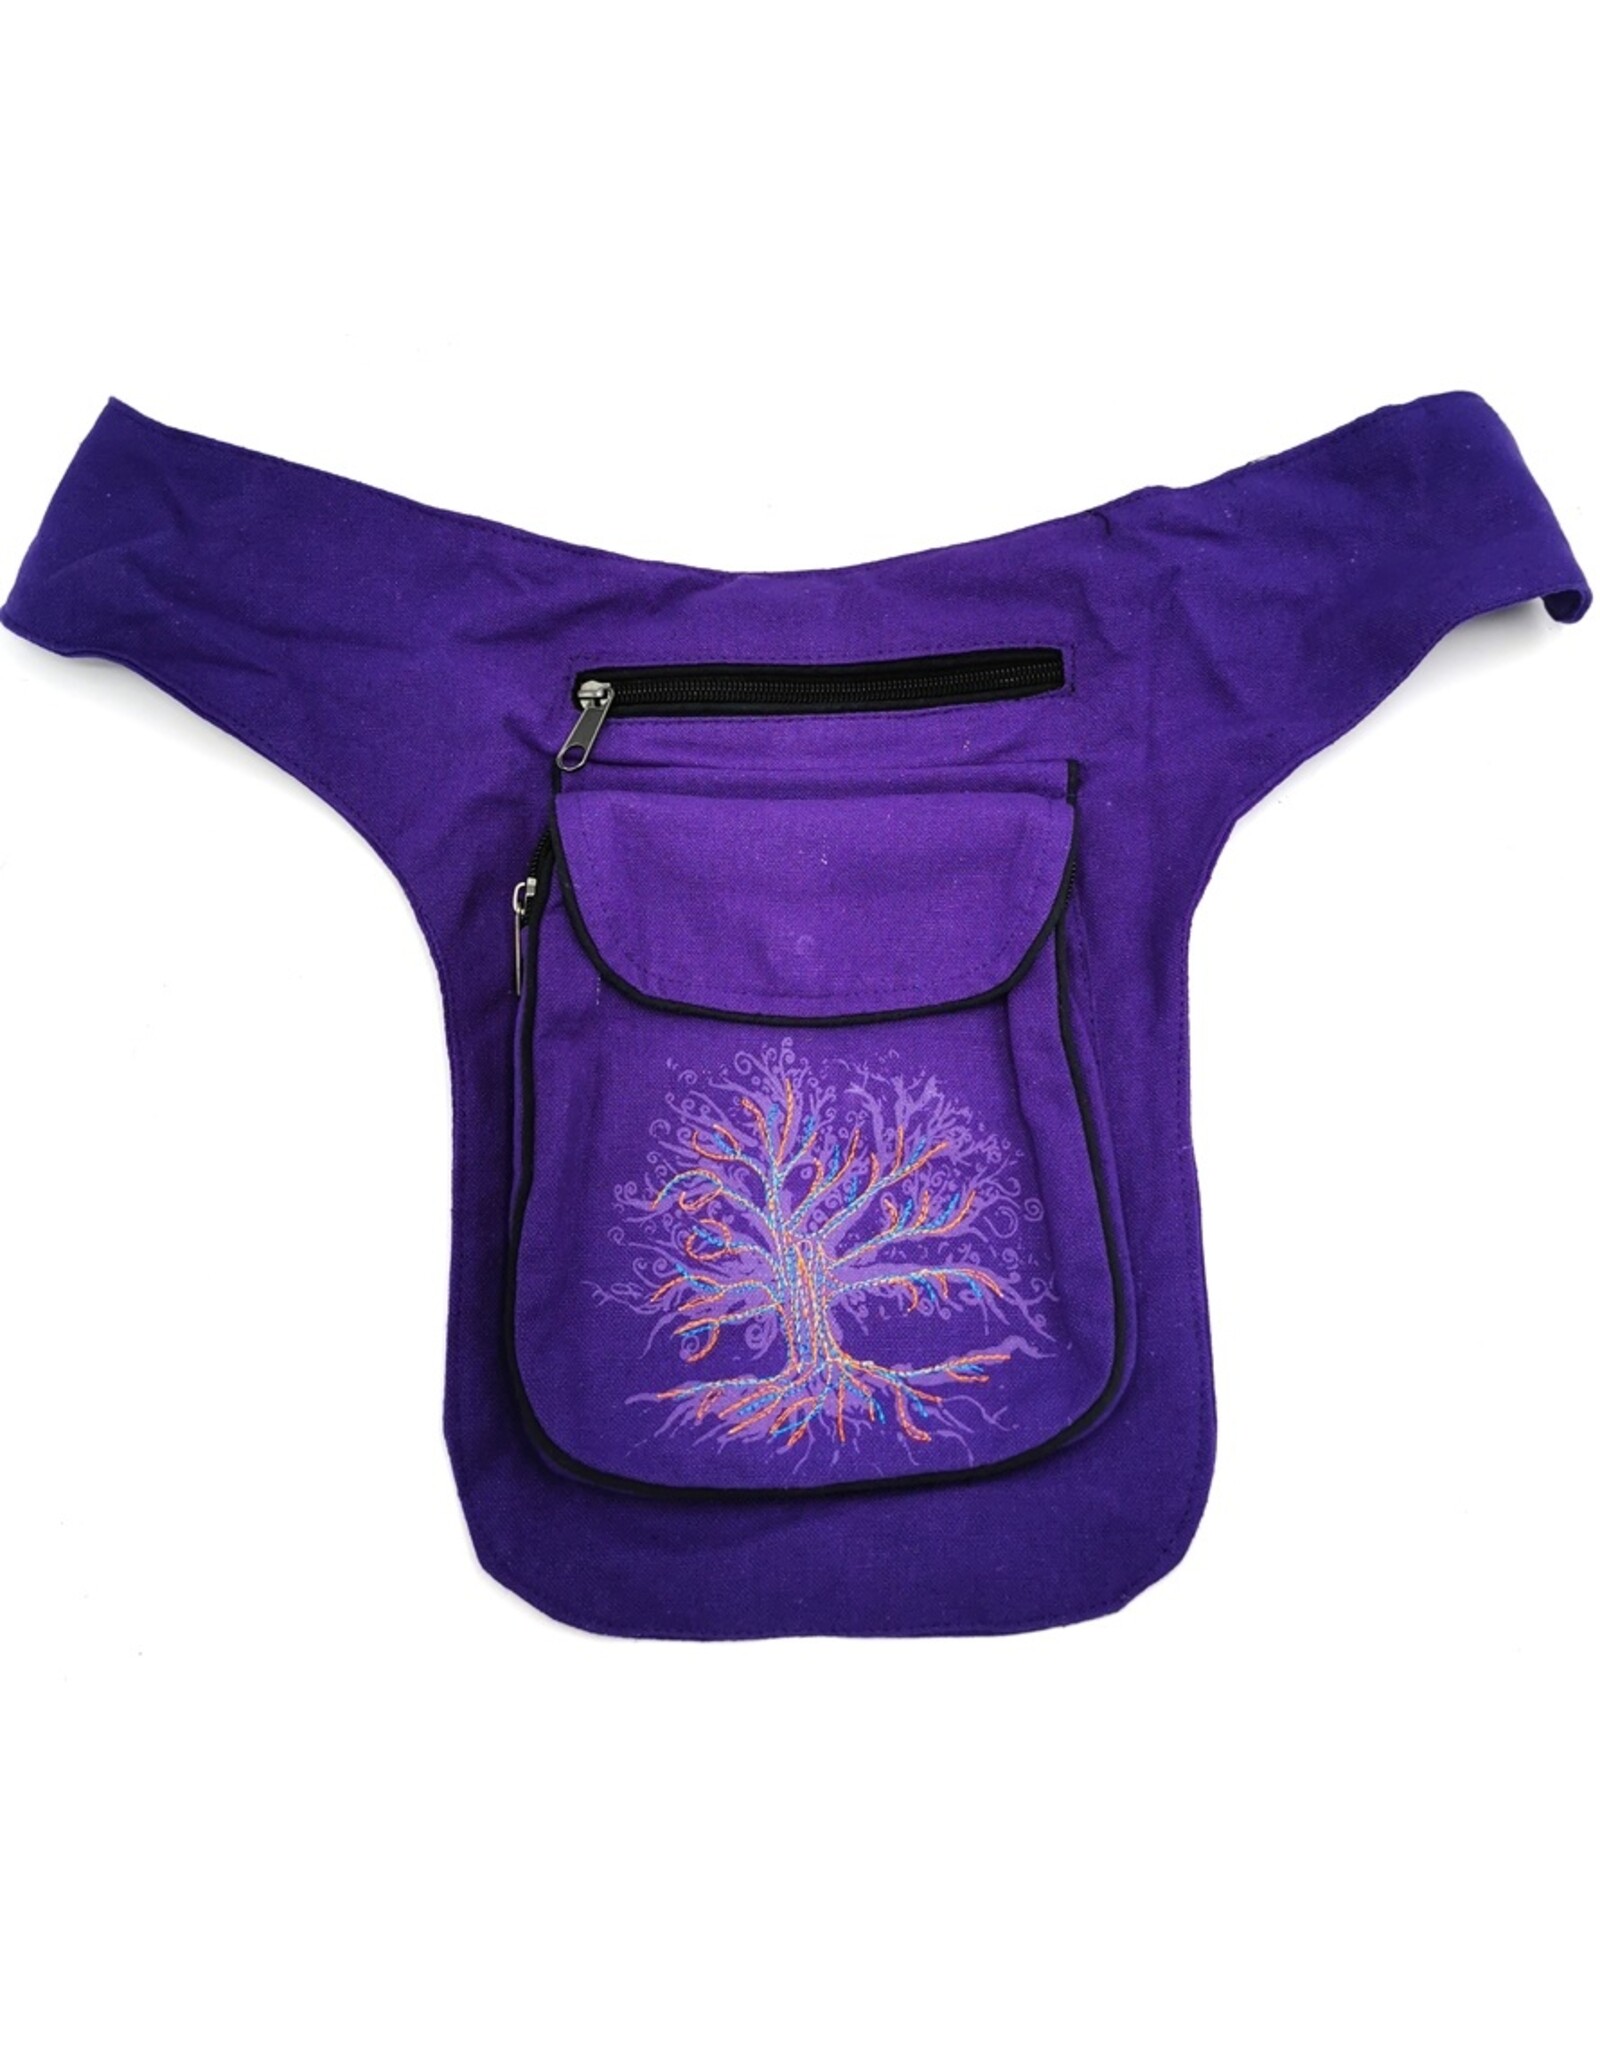 Trukado Backpacks  and fanny packs - Waist bag Tree of Life Recycled Cotton purple